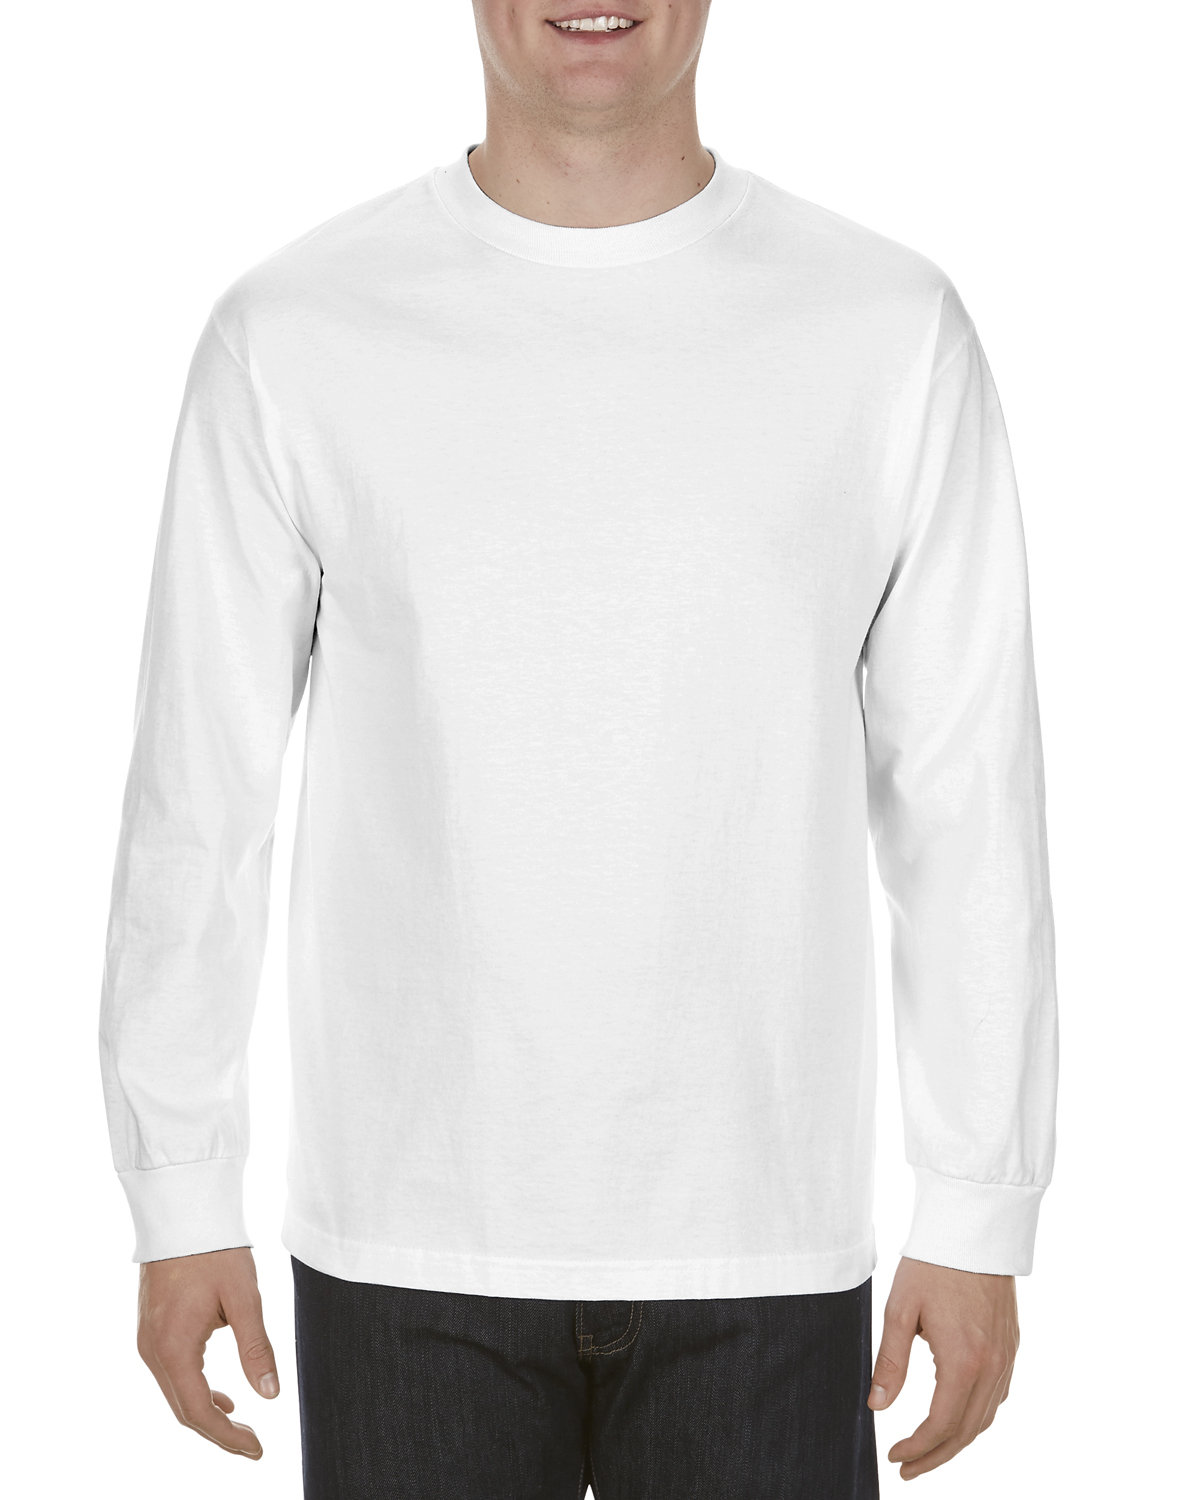 American Apparel Adult 6.0 oz., 100% Cotton Long-Sleeve T-Shirt WHITE 